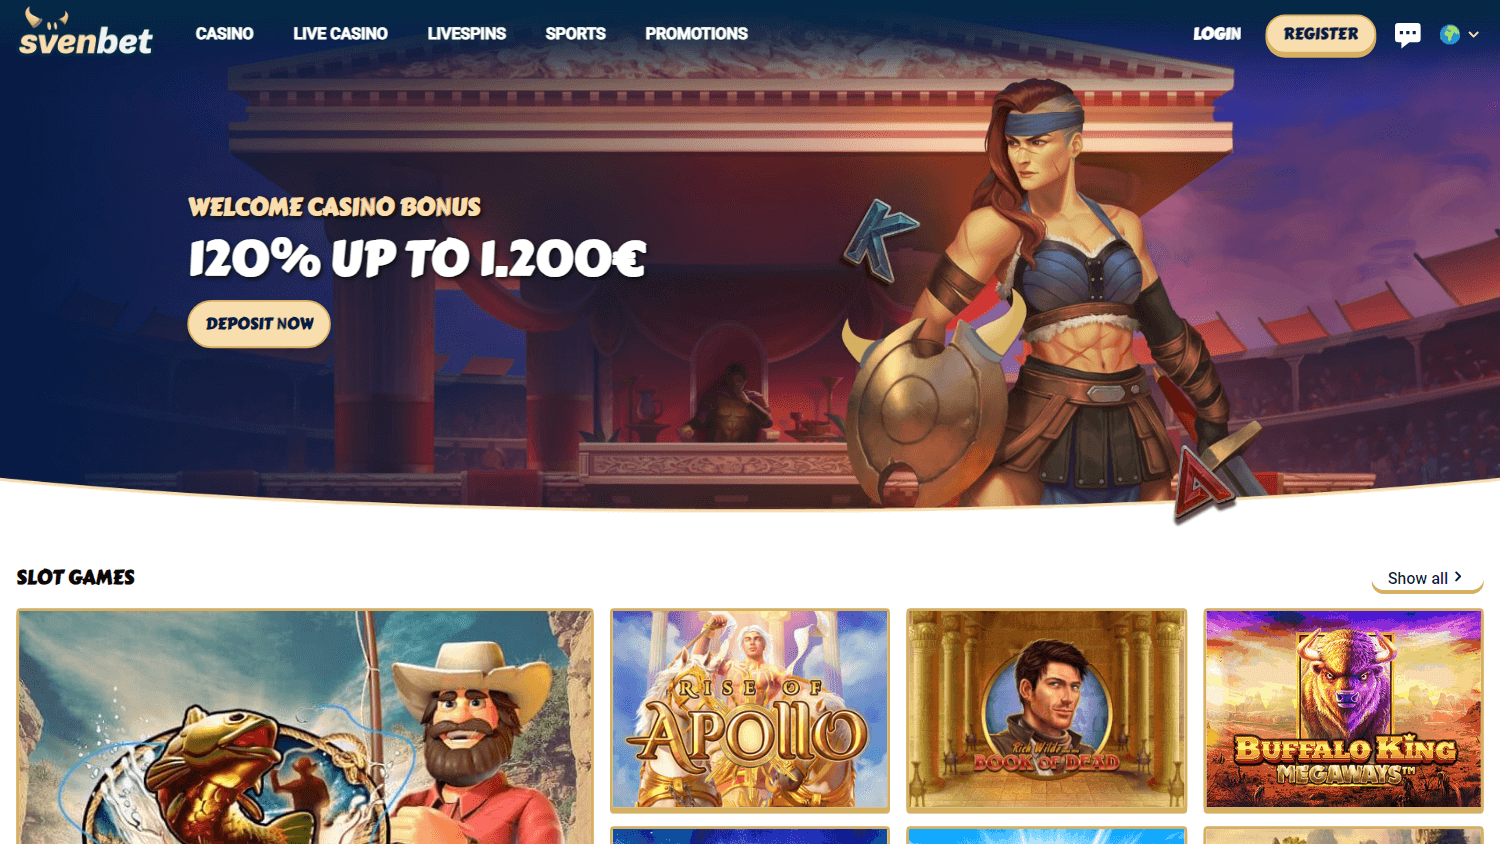 svenbet_casino_homepage_desktop